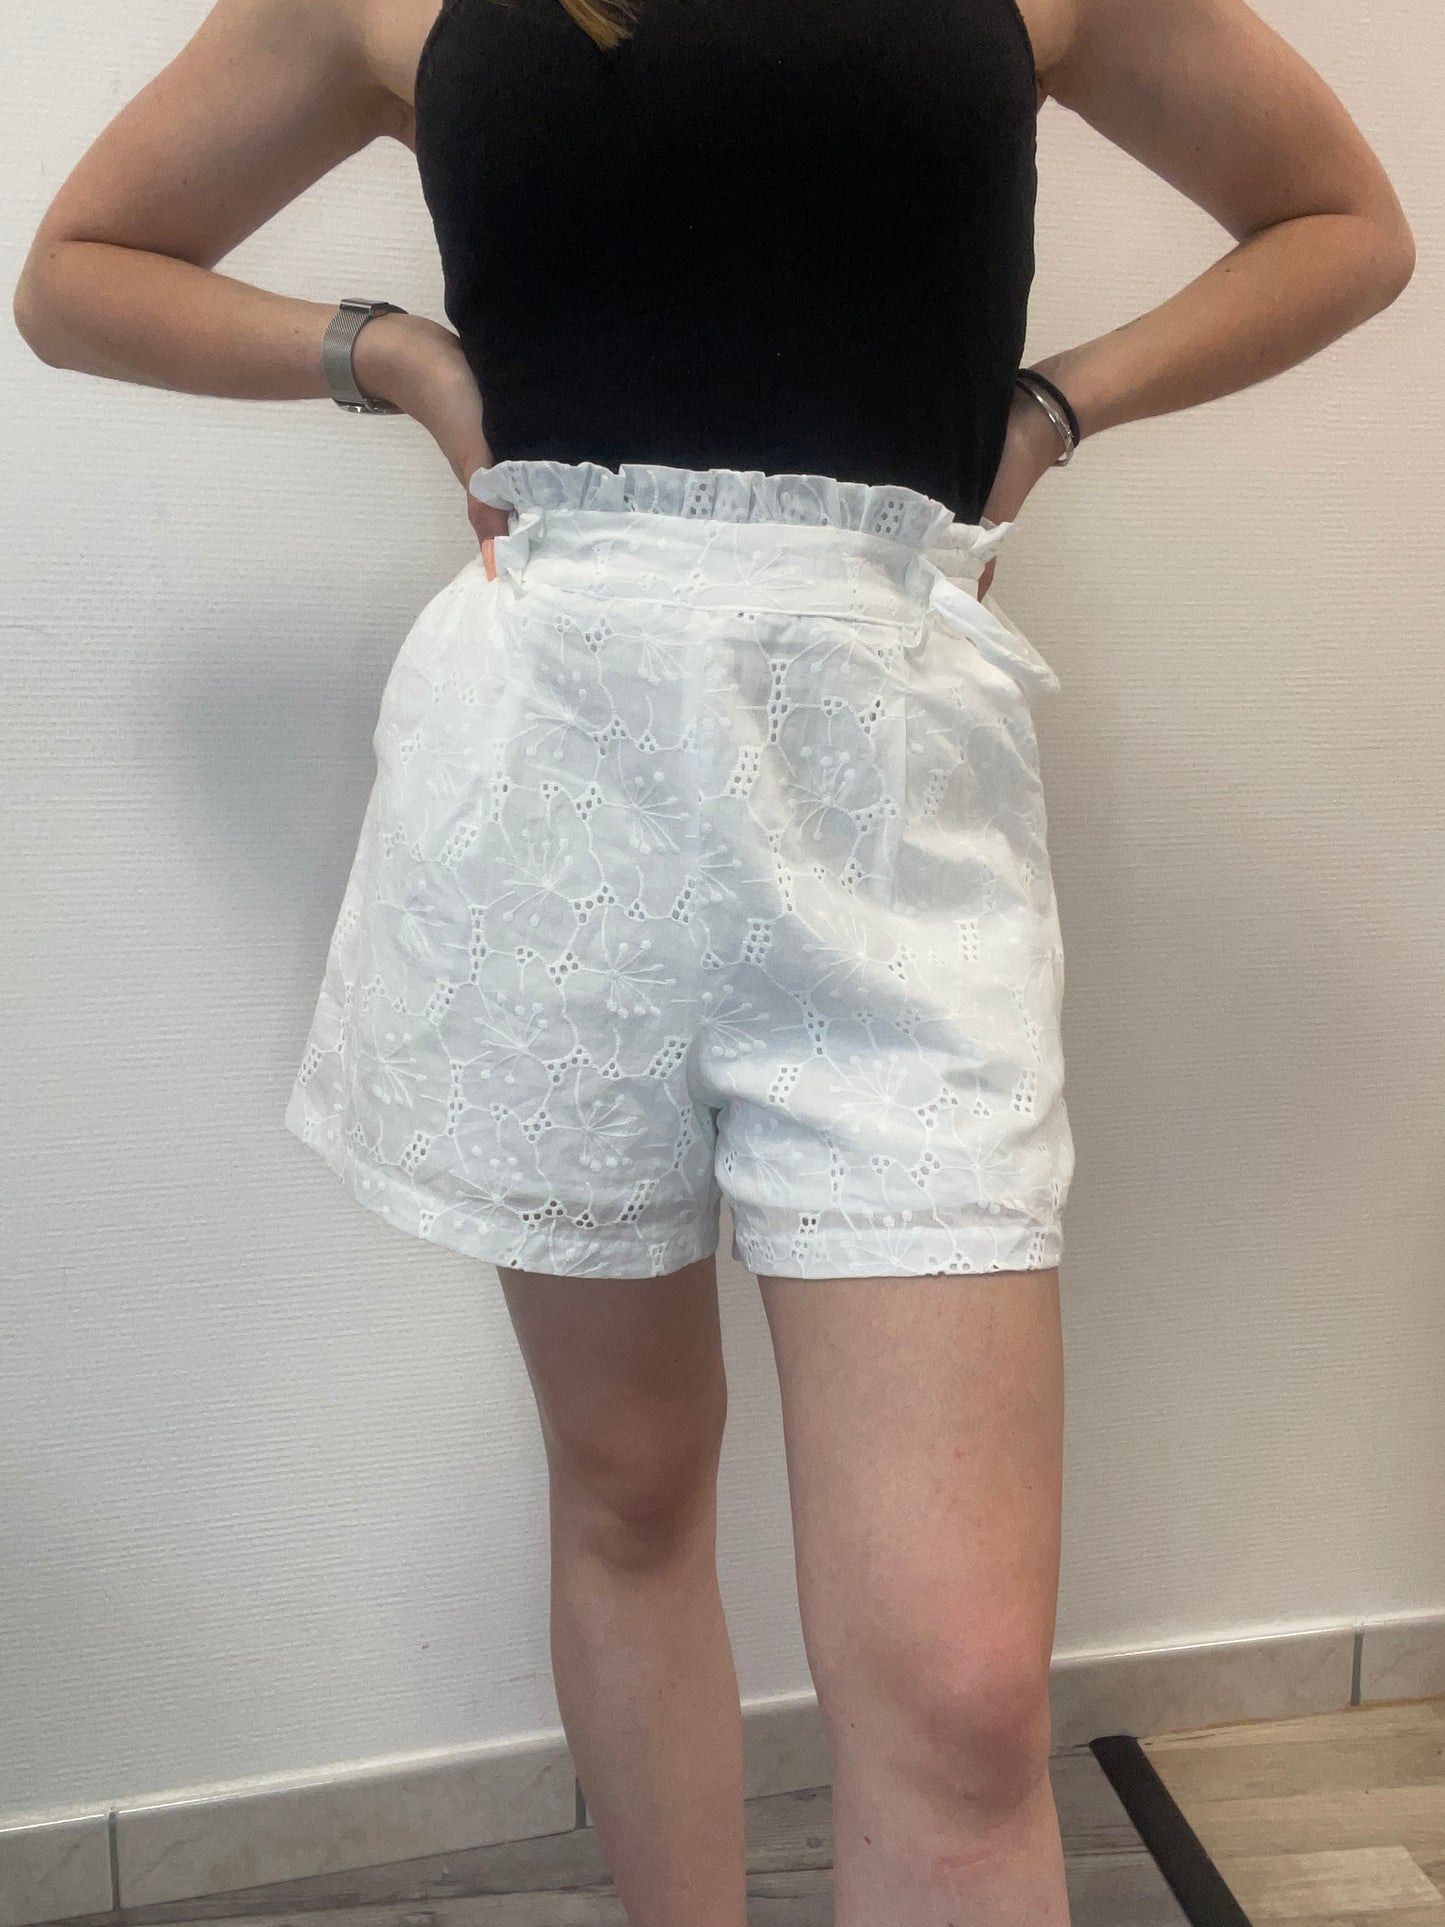 Lace shorts